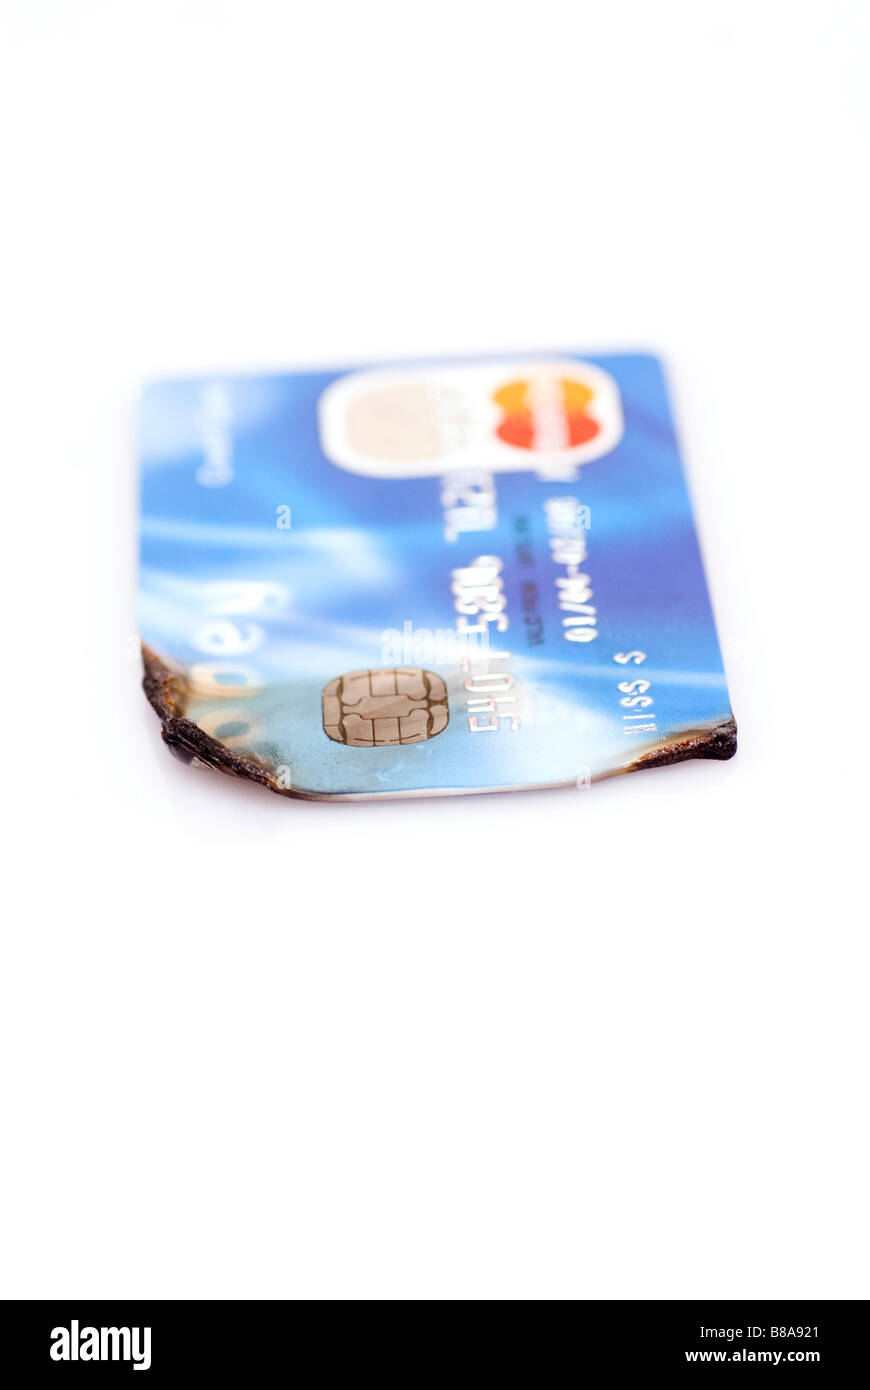 Burned credit card Stock Photo